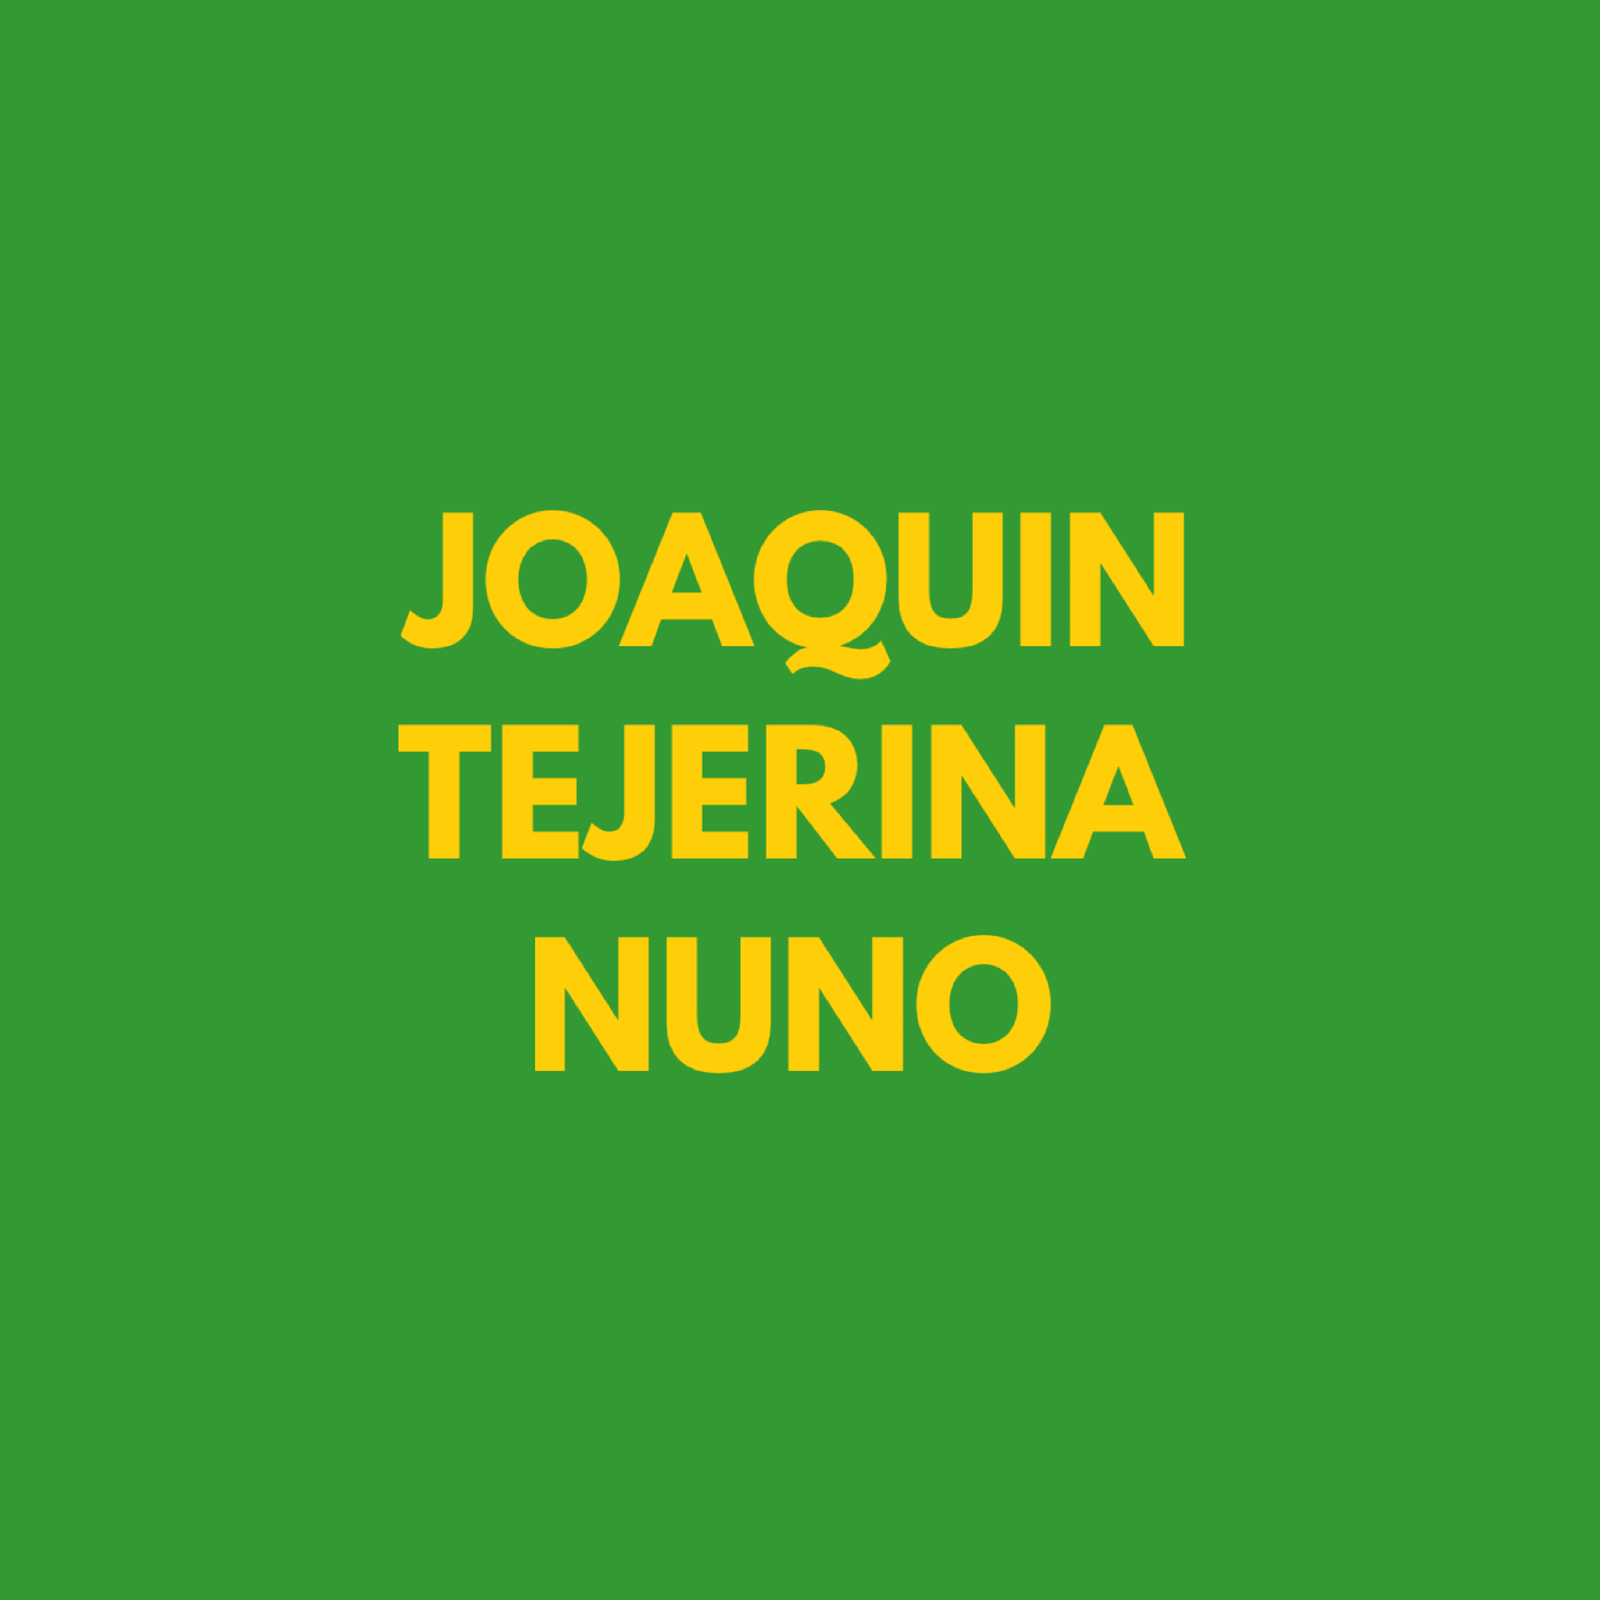 Joaquin Tejerina Nuno